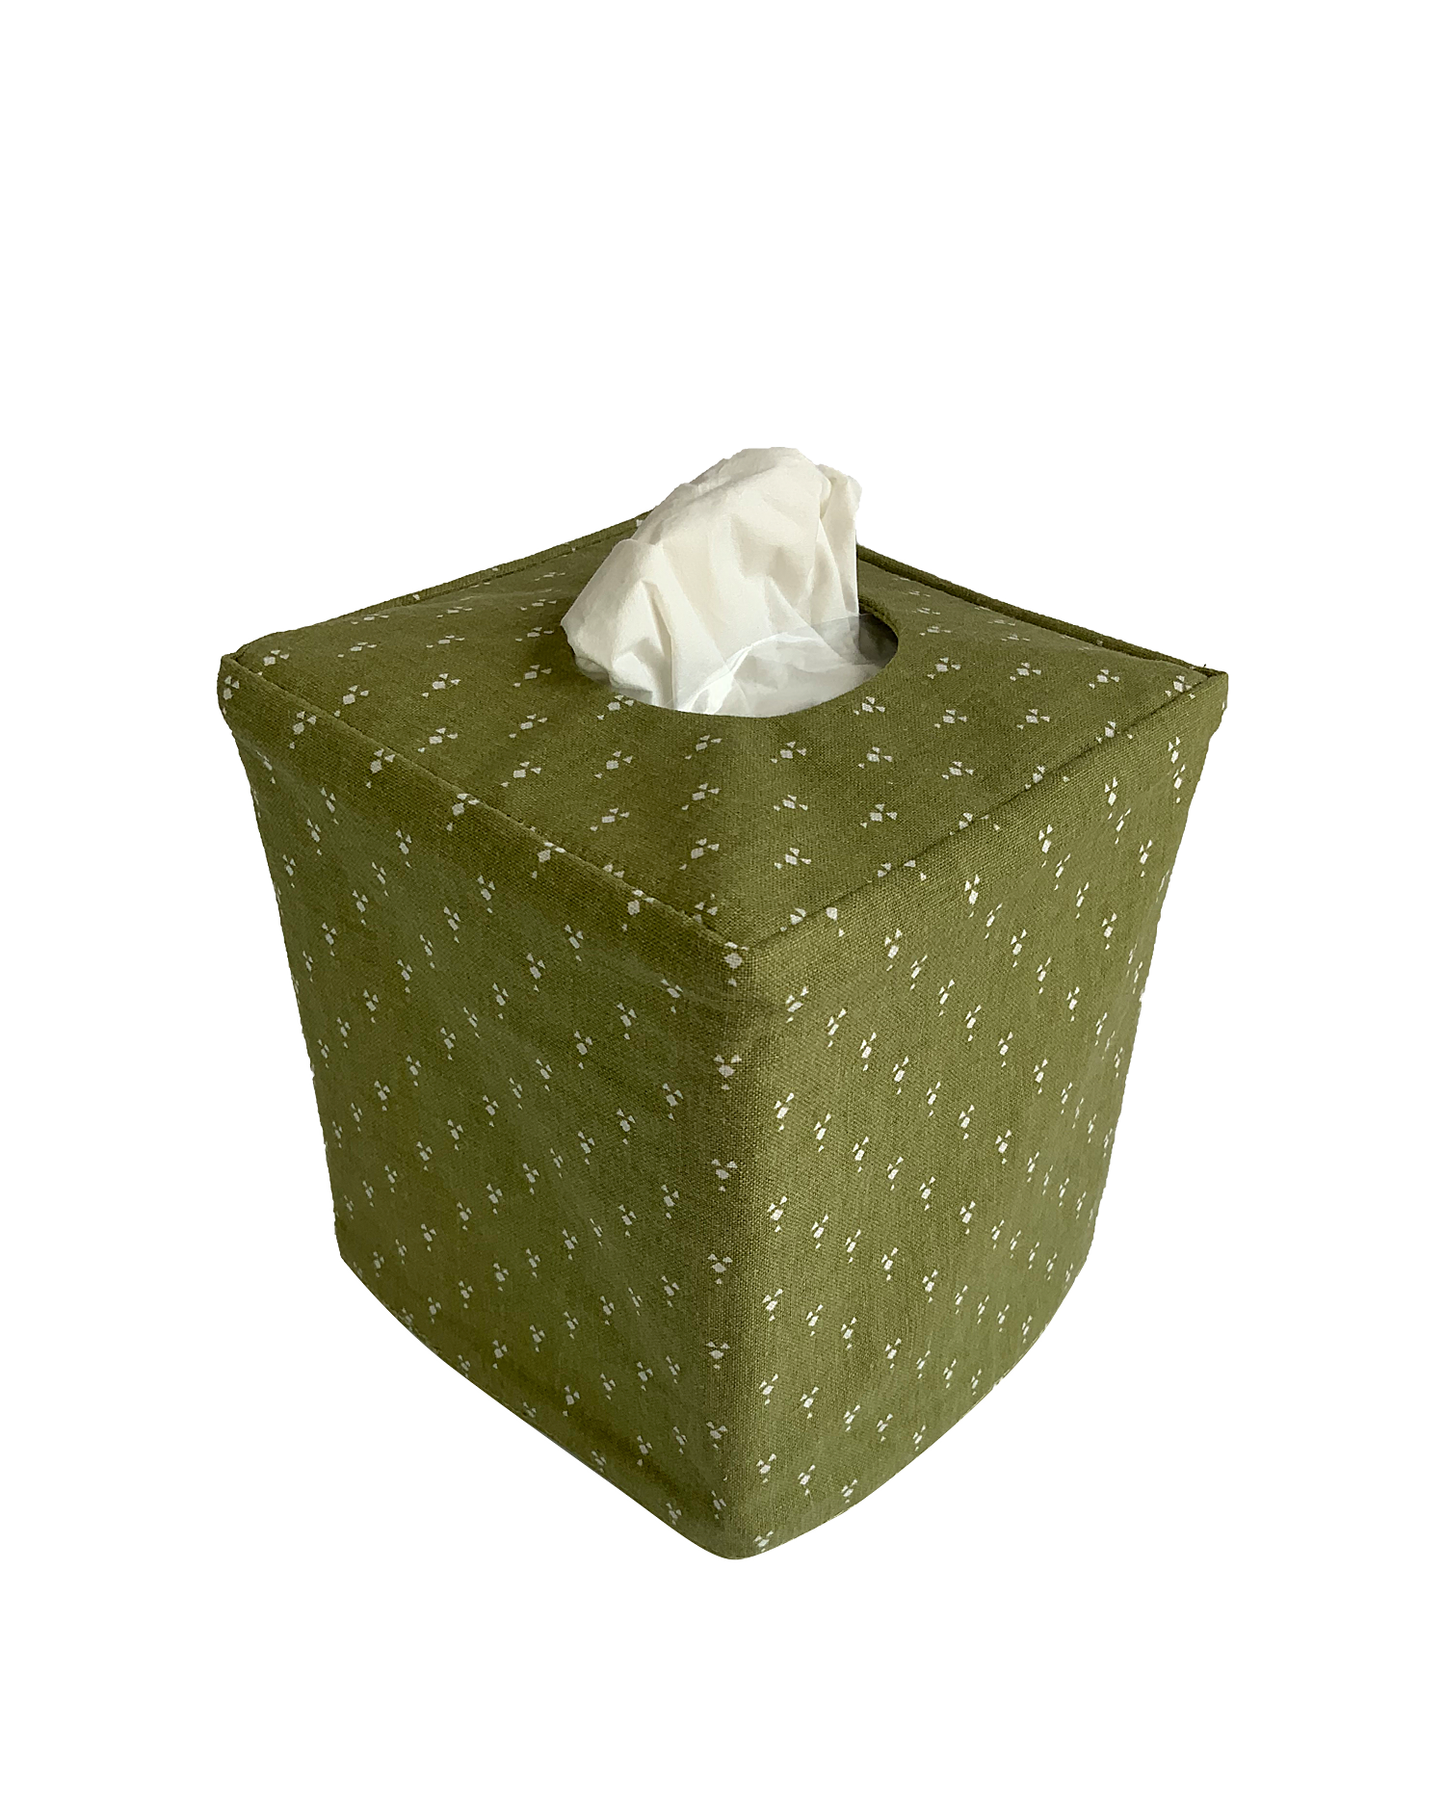 Tissue Box Cover Laura Ashley “Nutmeg